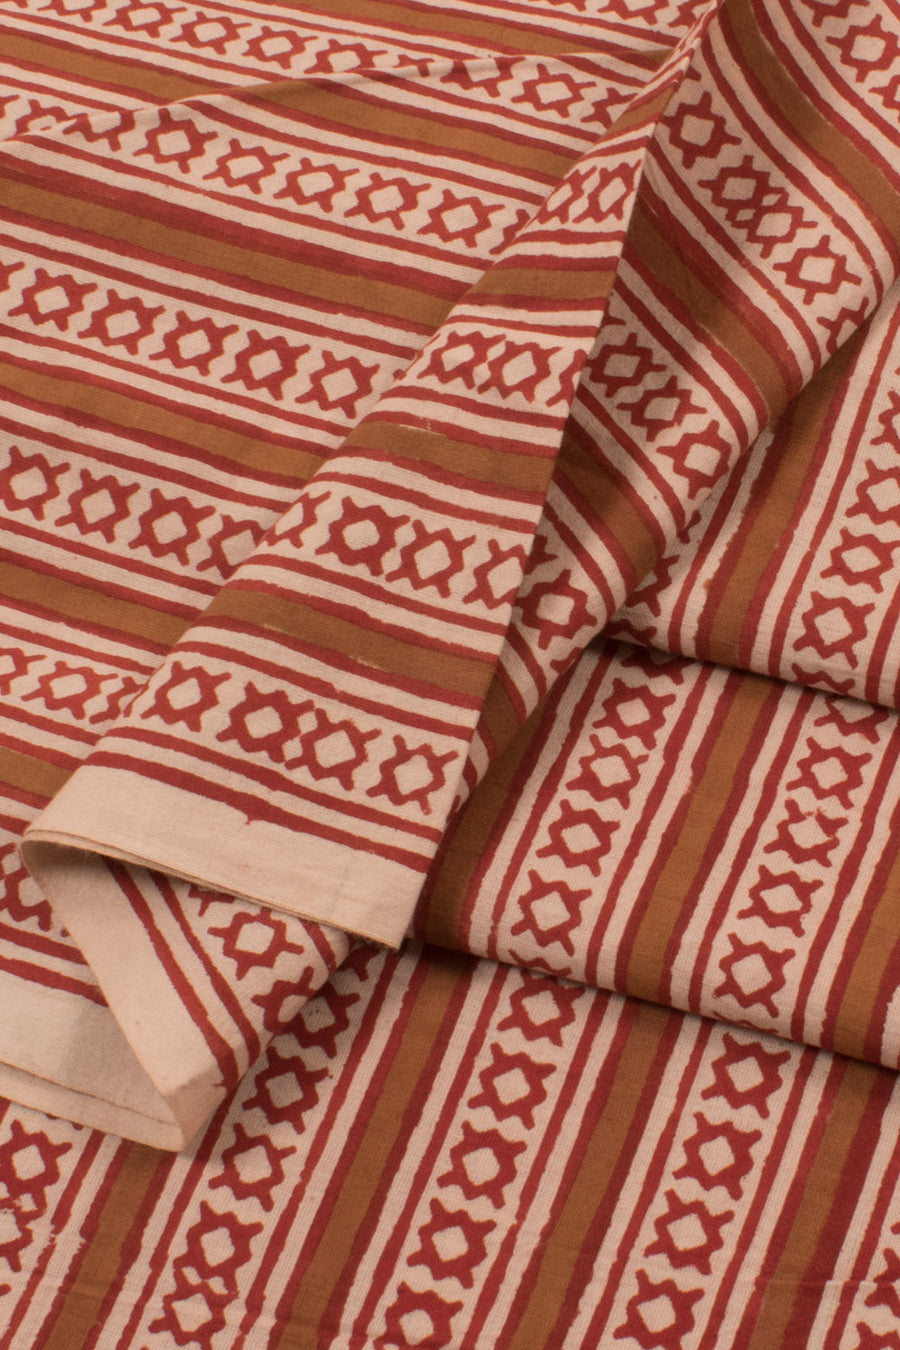 Hand Block Printed 2.5 m Cotton Kurta Material with Stripes, Geometric Design